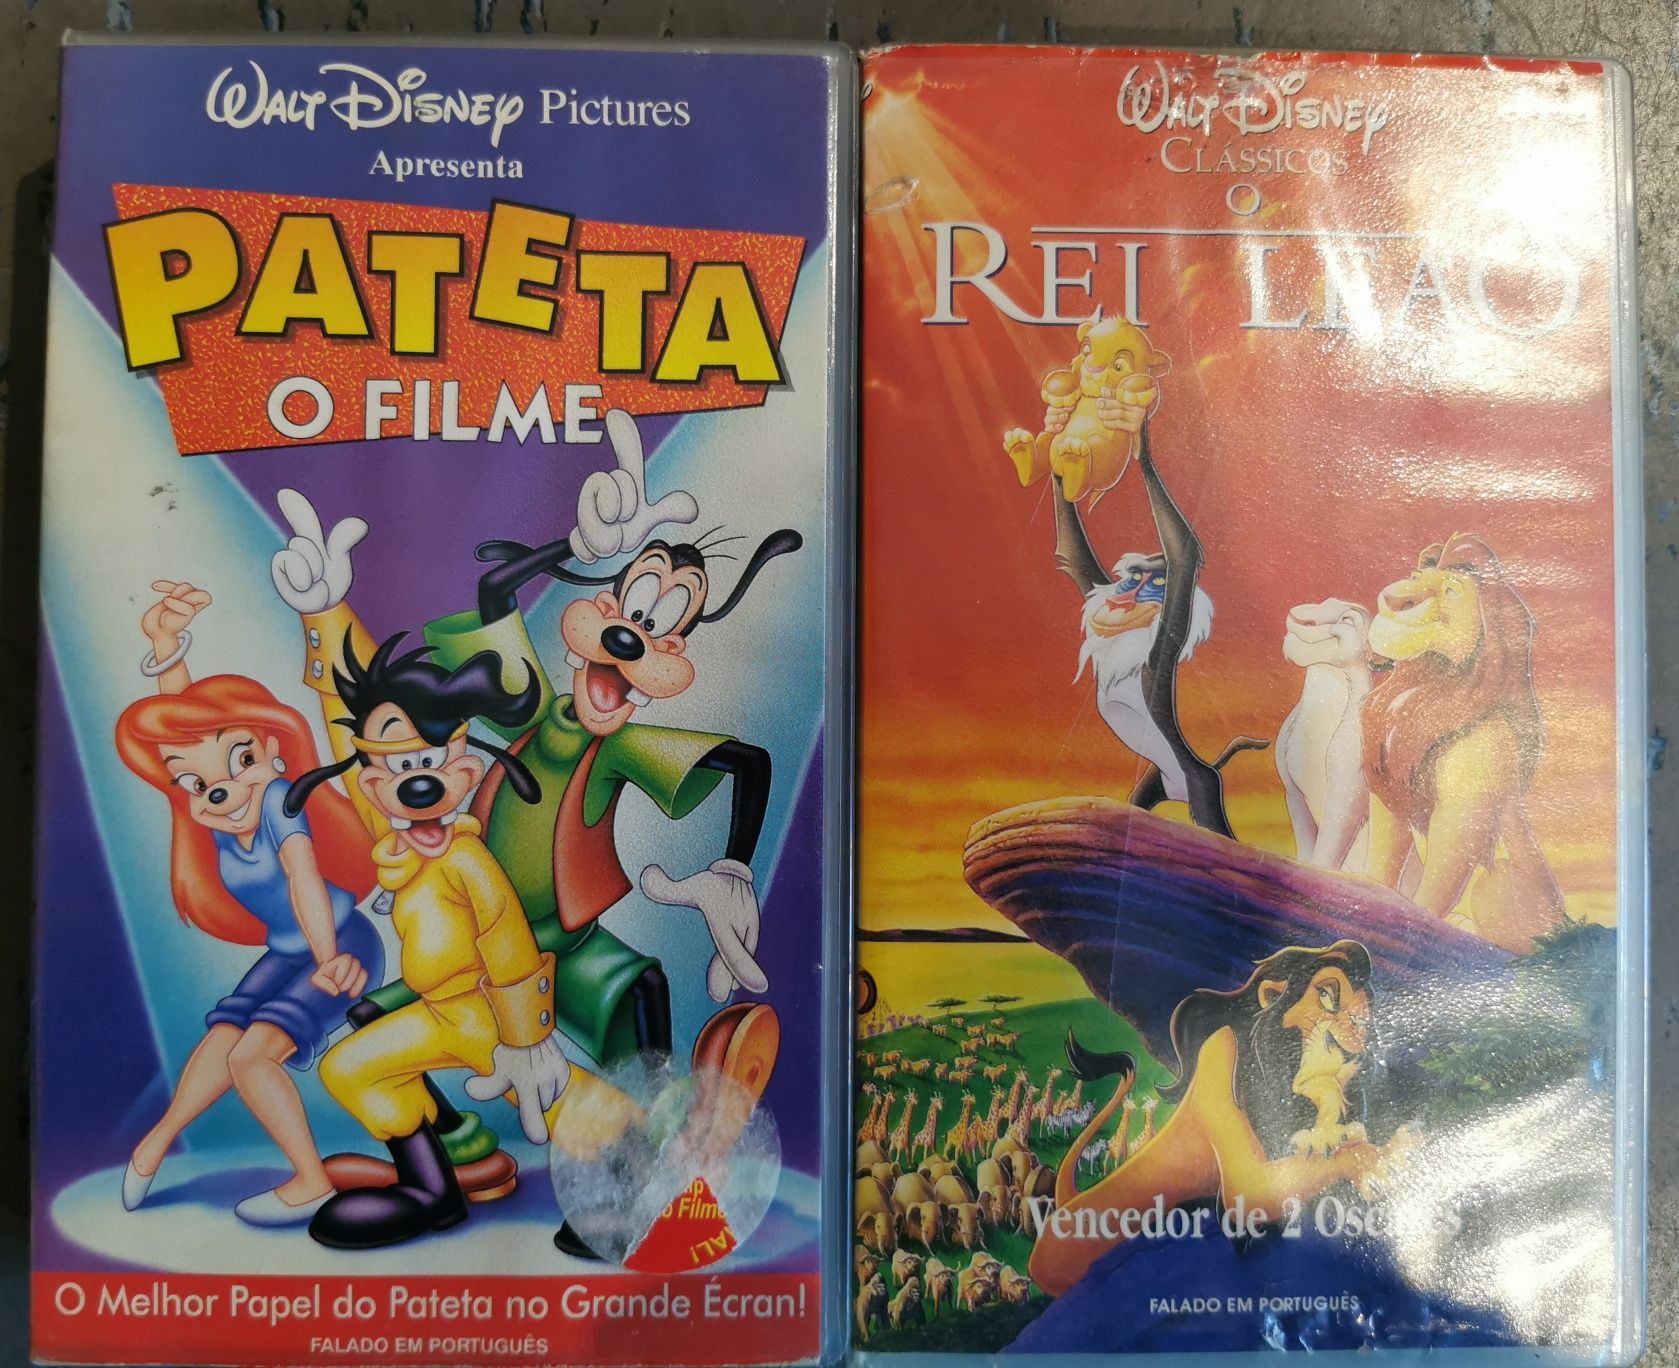 Cassetes VHS Disney, Tom & Jerry, Loonney tunes, Pokemon, etc